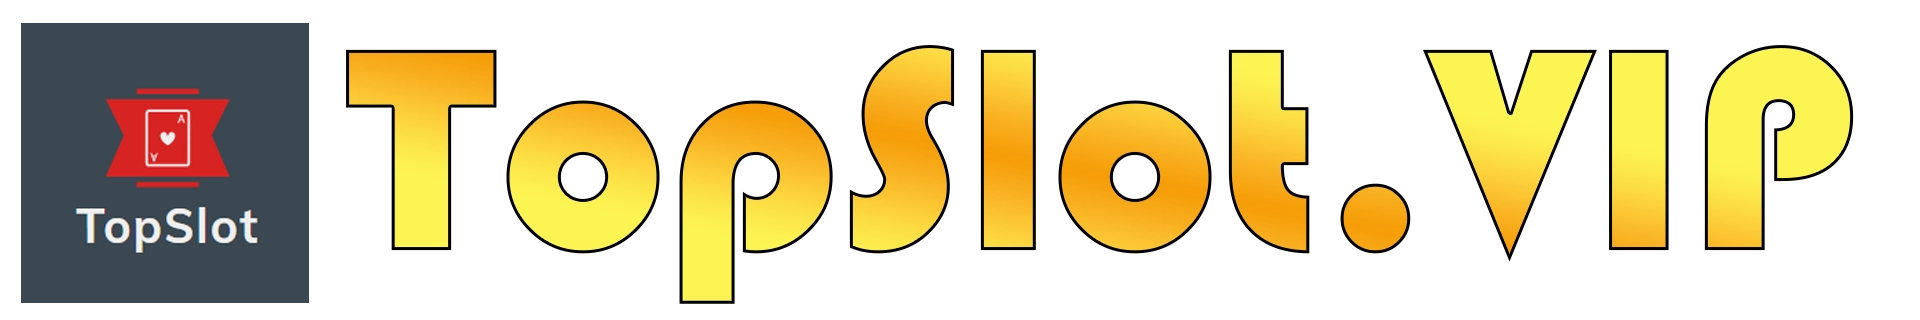 TopSlot Logo